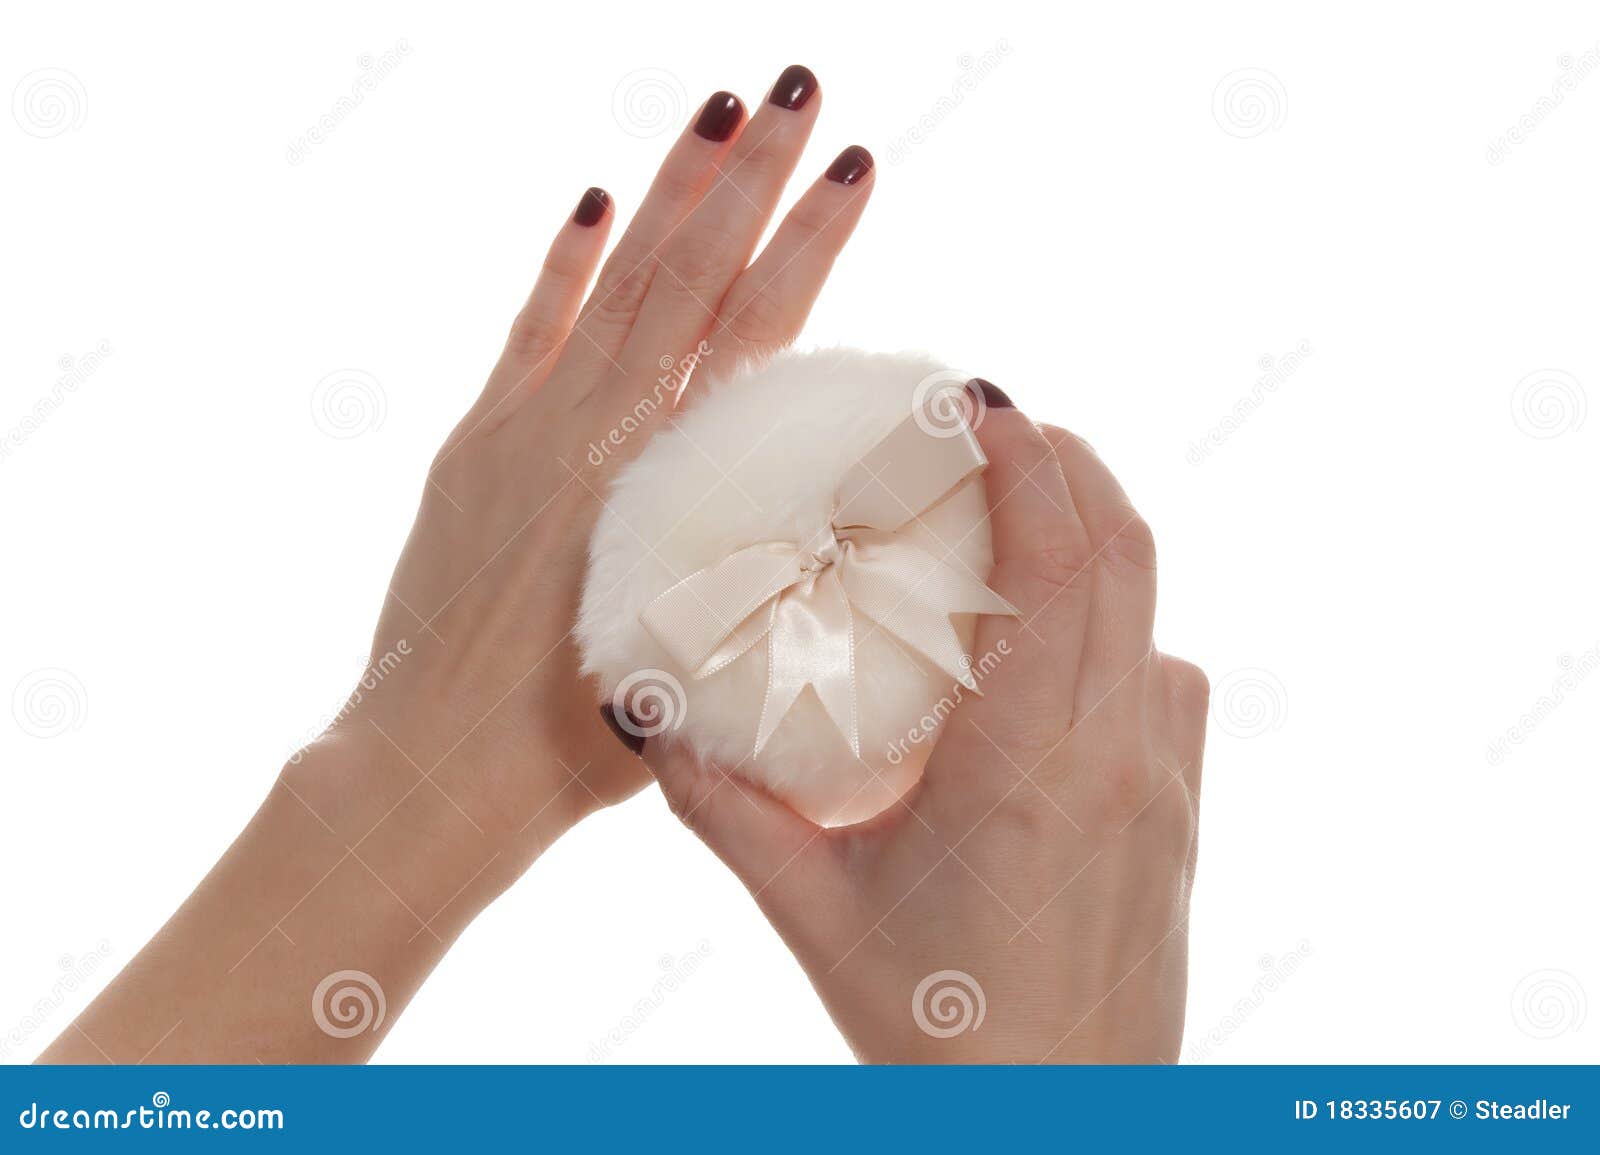 Female Hand Holding Powder Puff. Female Hand Isolated on White Holding Powder Puff